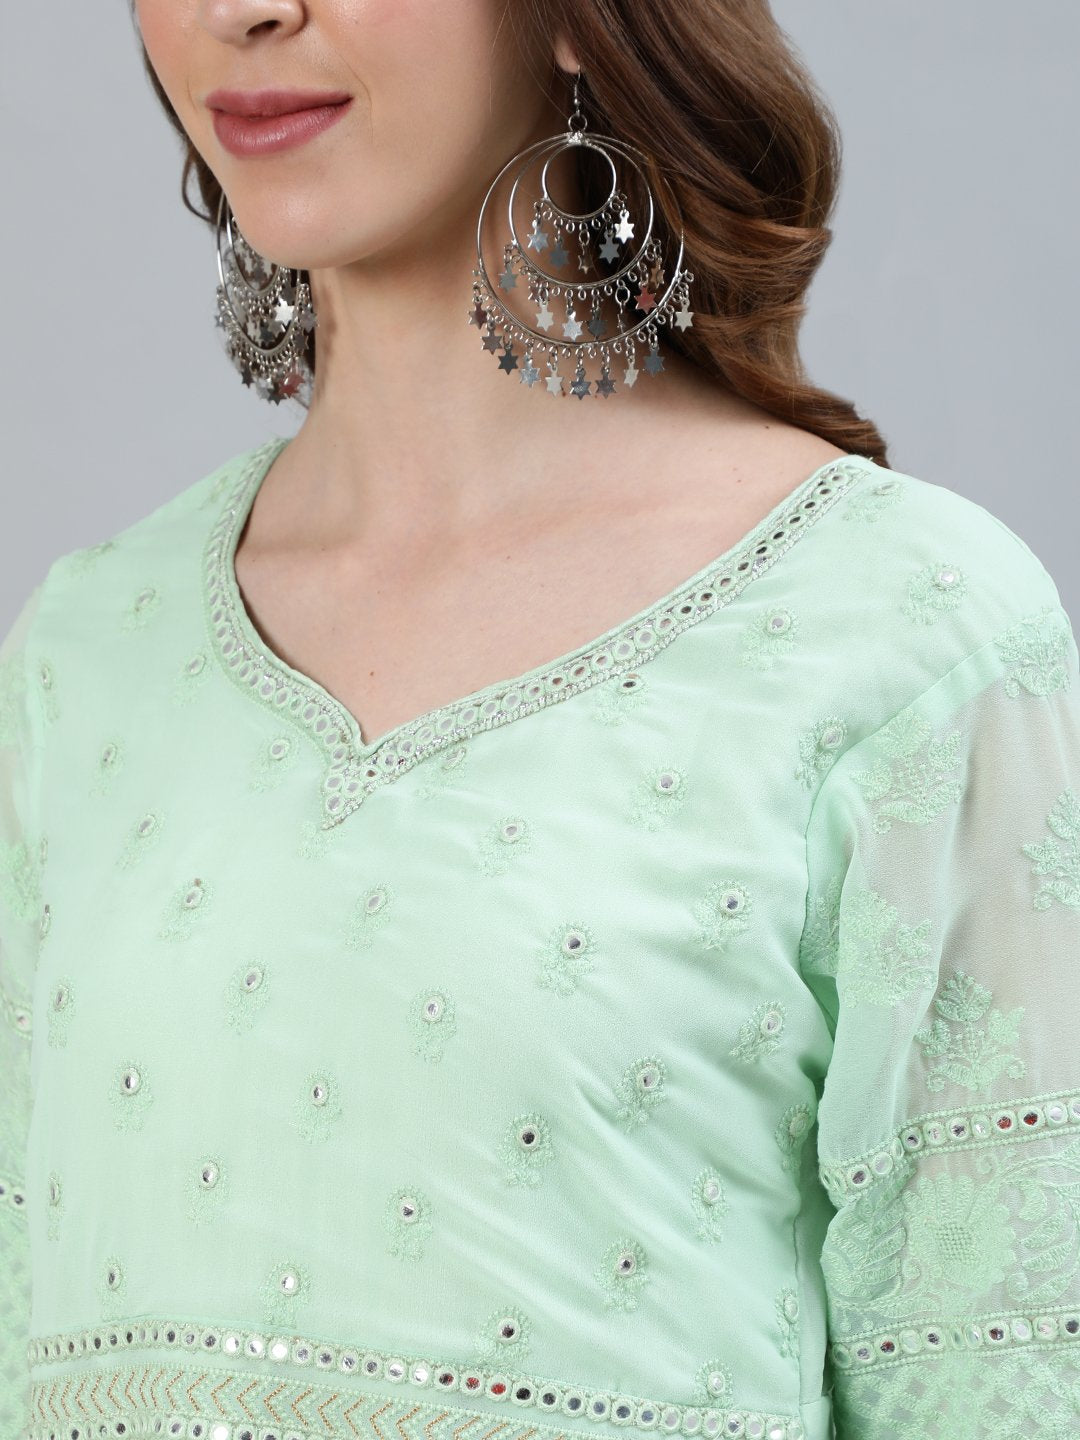 Ishin Women's Green Embroidered Anarkali Kurta With Dupatta 